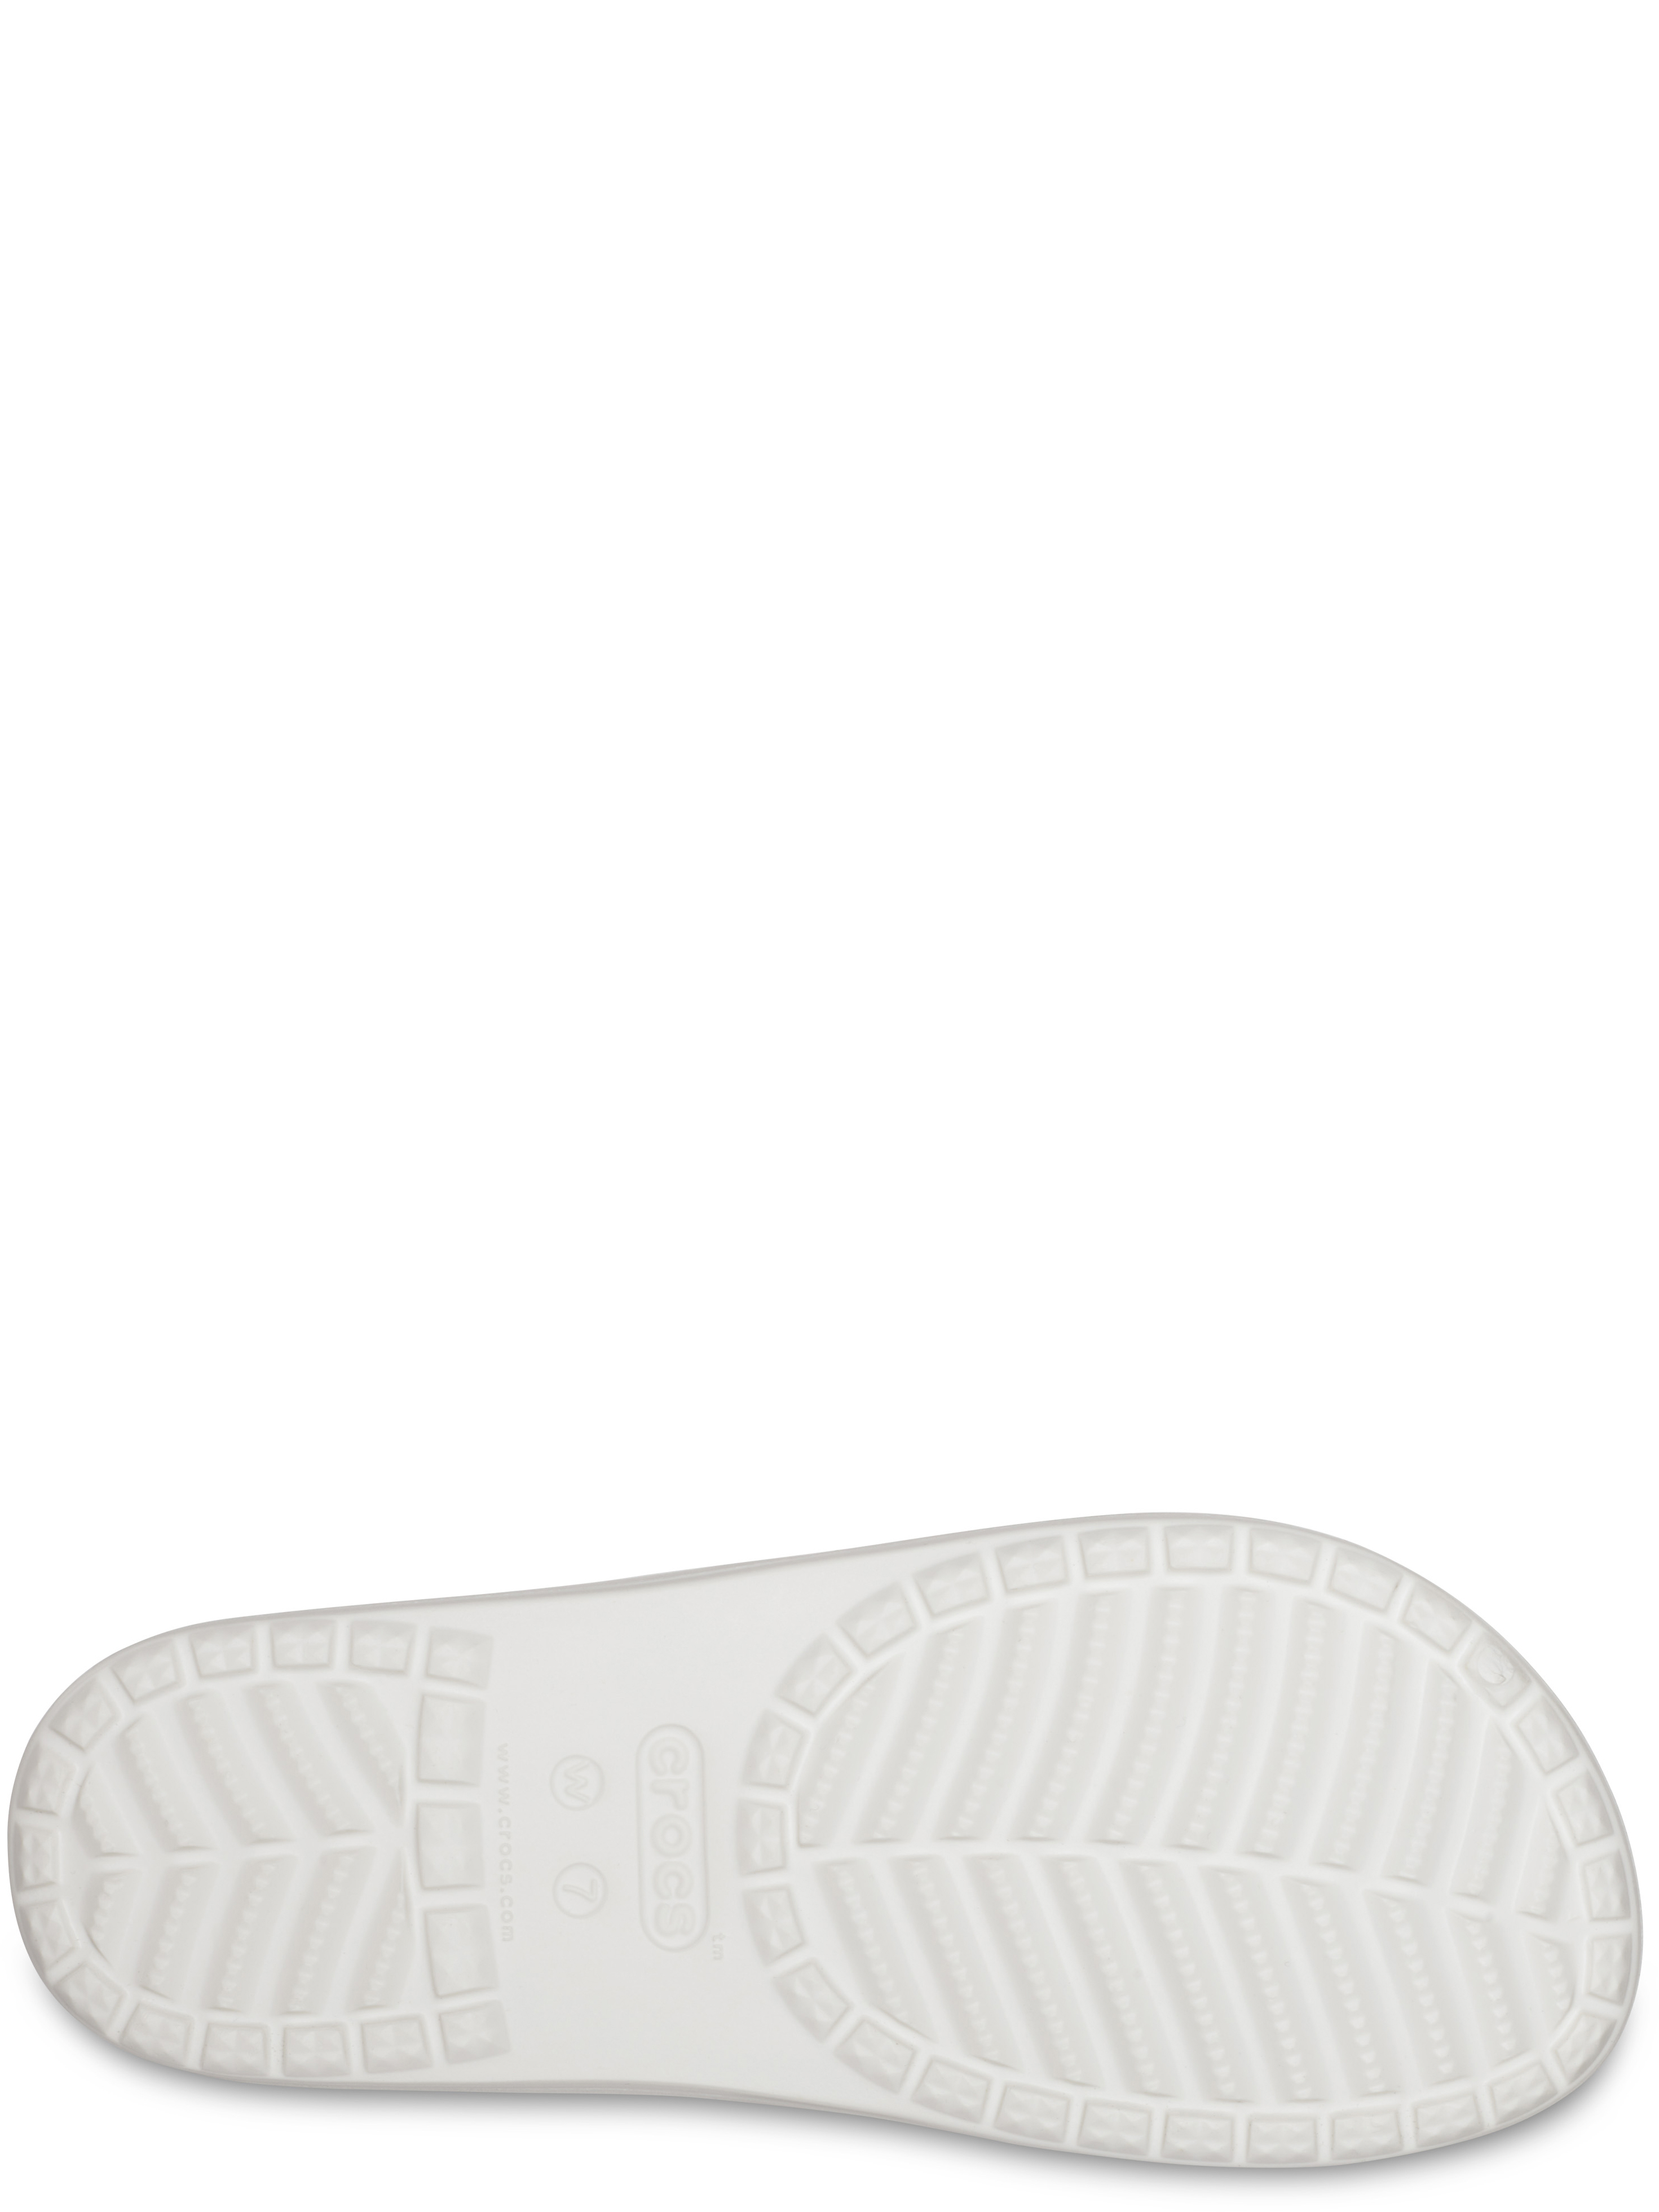 Crocs Women's Sloane Slide Sandals - image 4 of 6